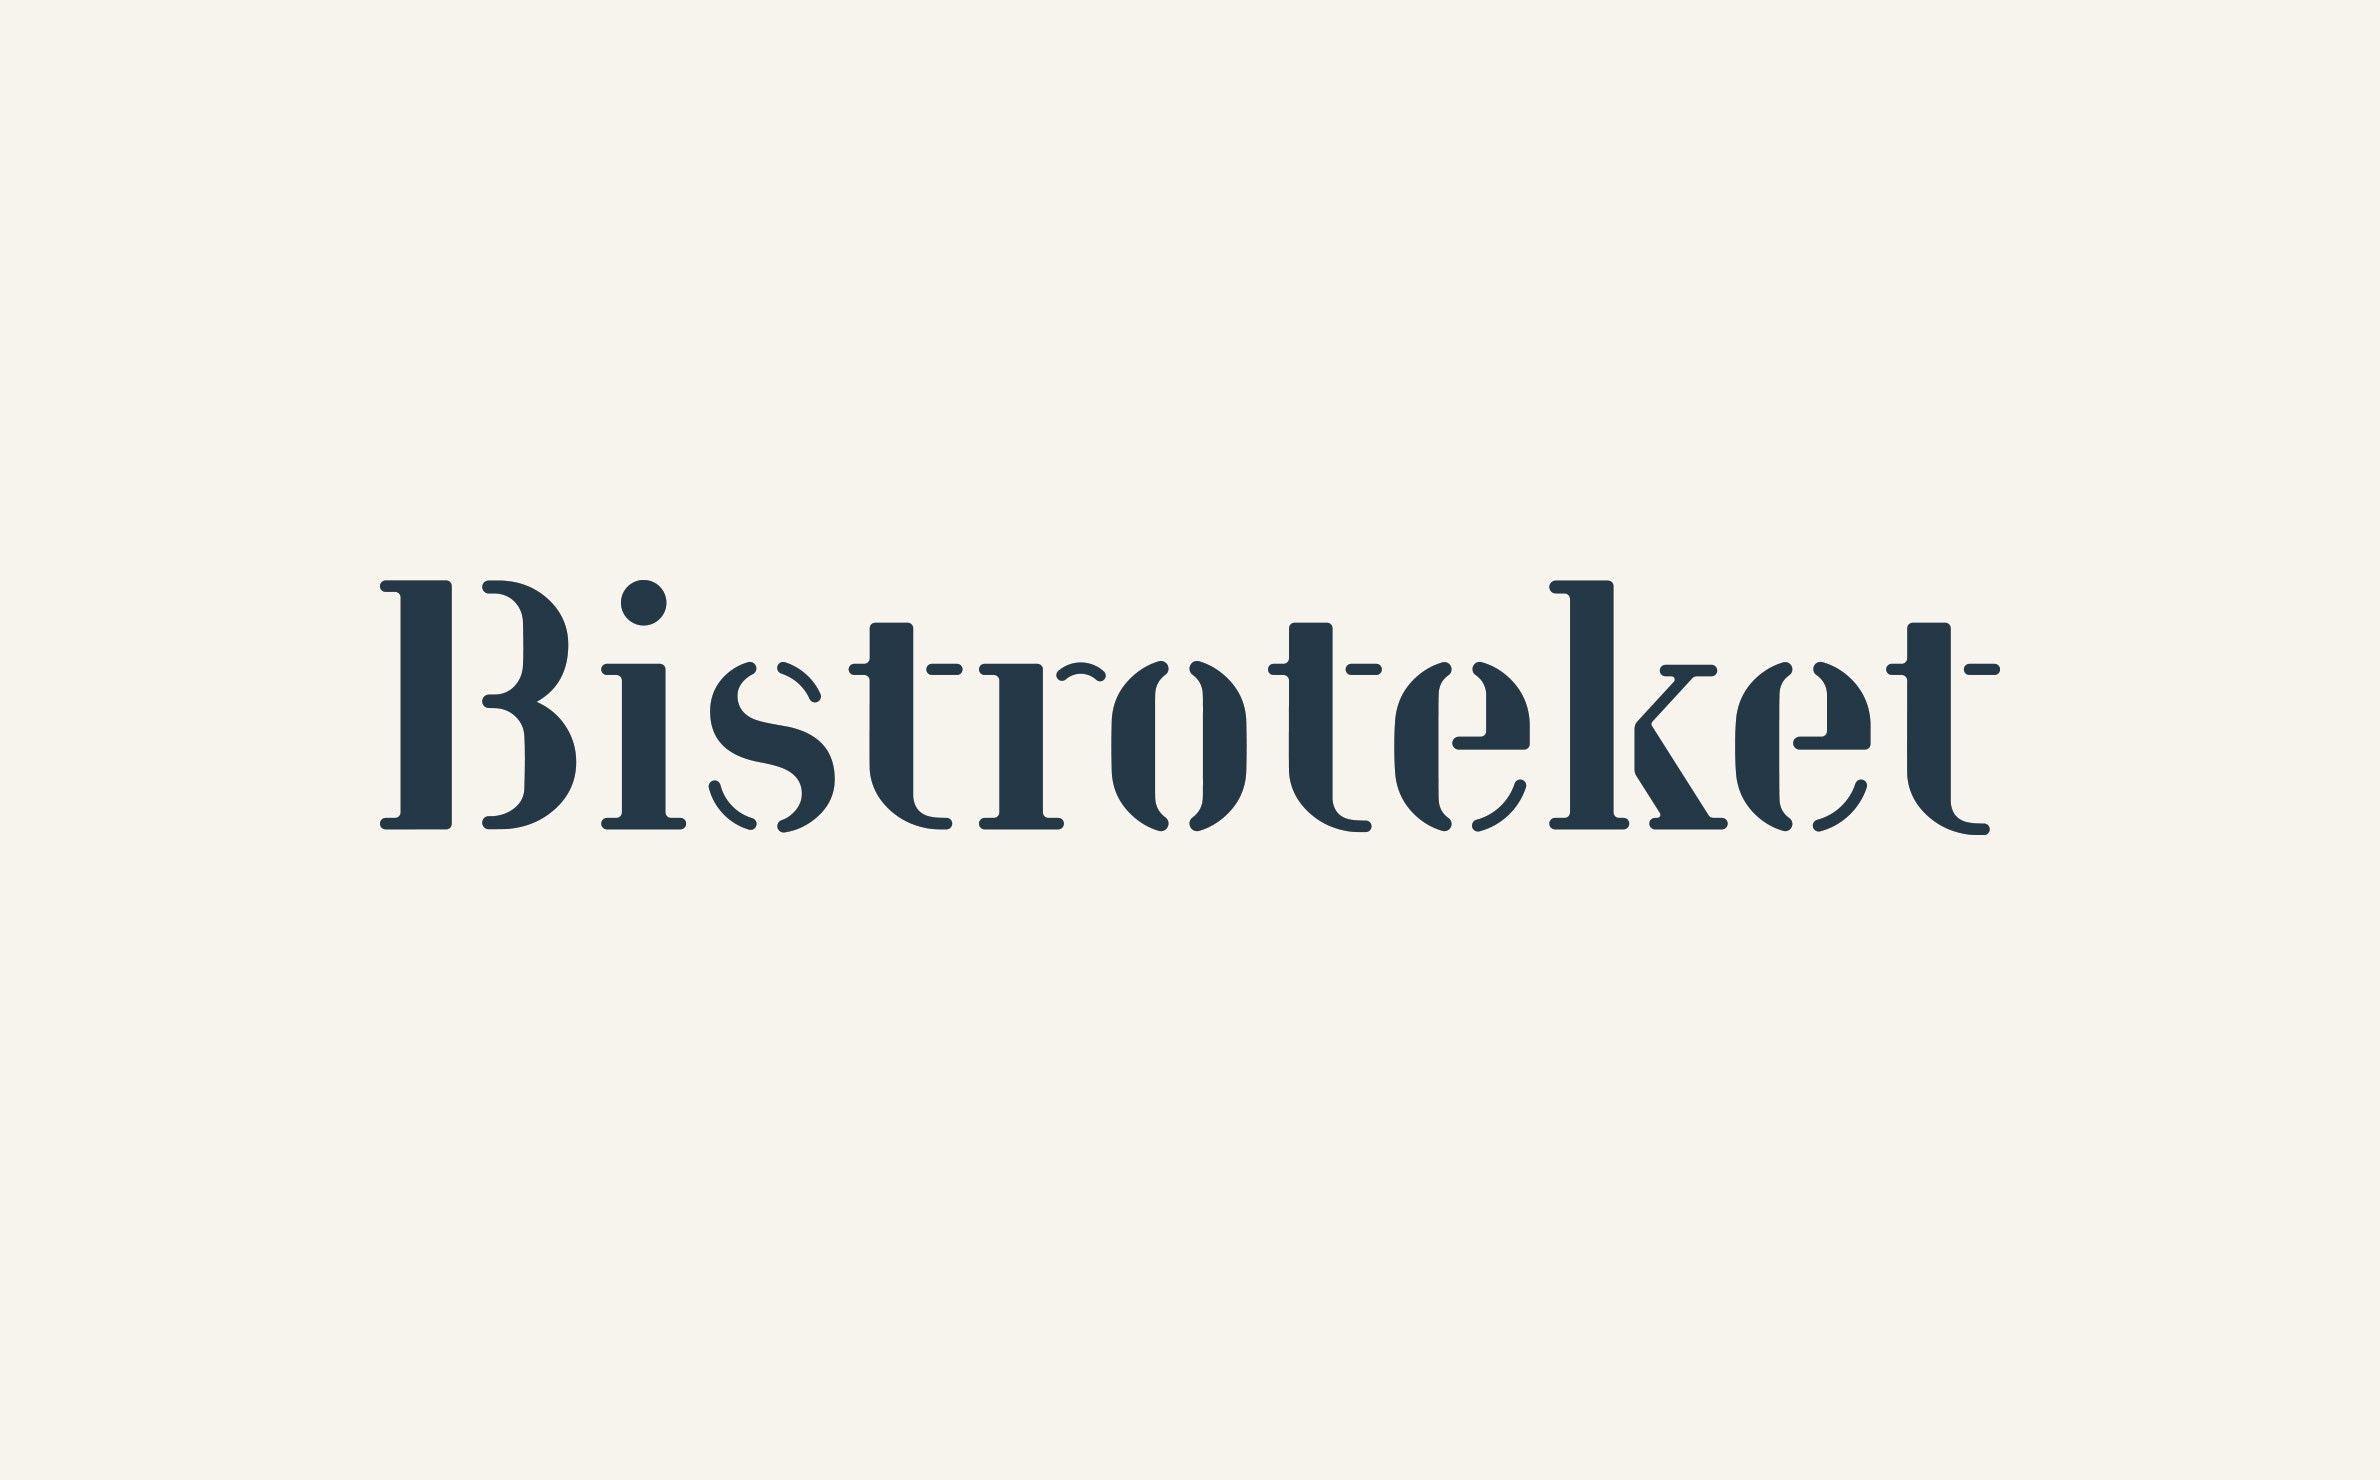 Swedish Restaurant Logo - Great stencil friendly typographical solution for Bistroteket ...